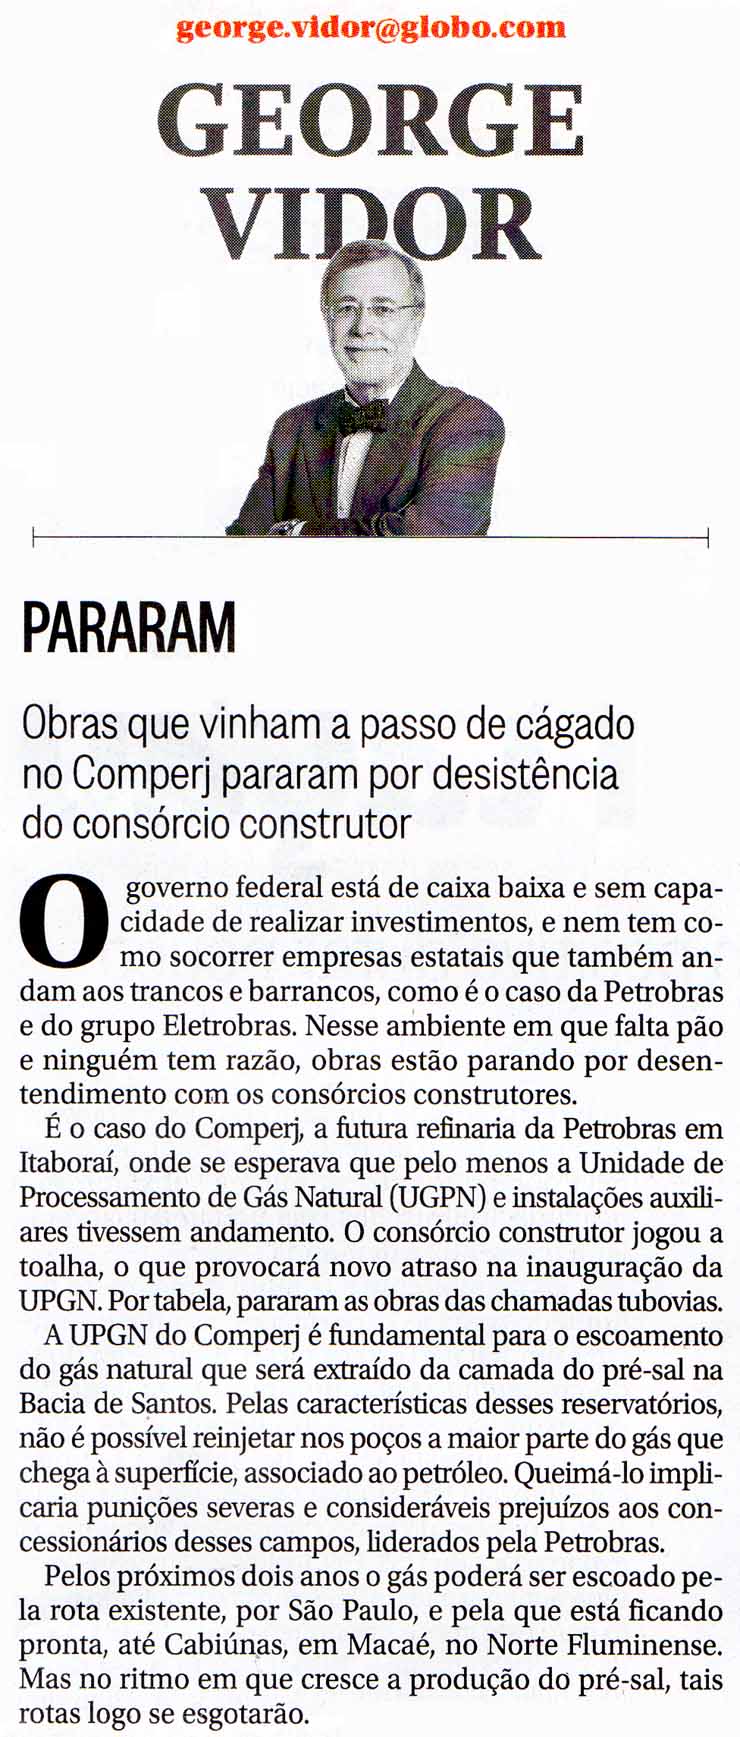 O Globo - 02/11/2015 - Coluna de George Vidor